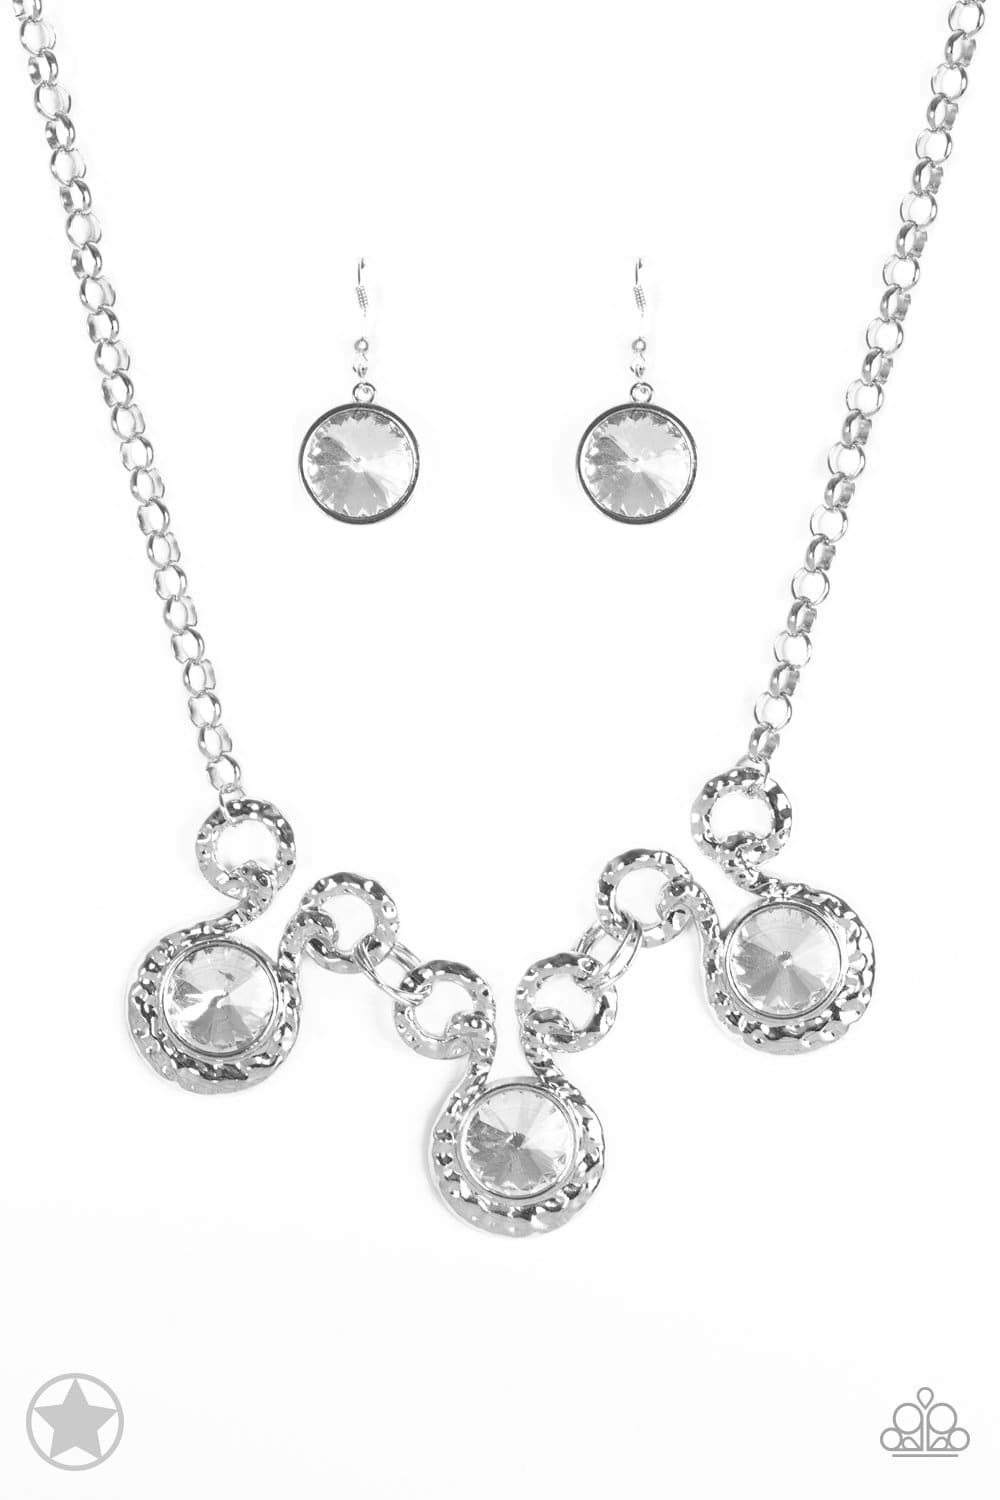 Hypnotized - Silver Blockbuster Necklace - Paparazzi Accessories - GlaMarous Titi Jewels